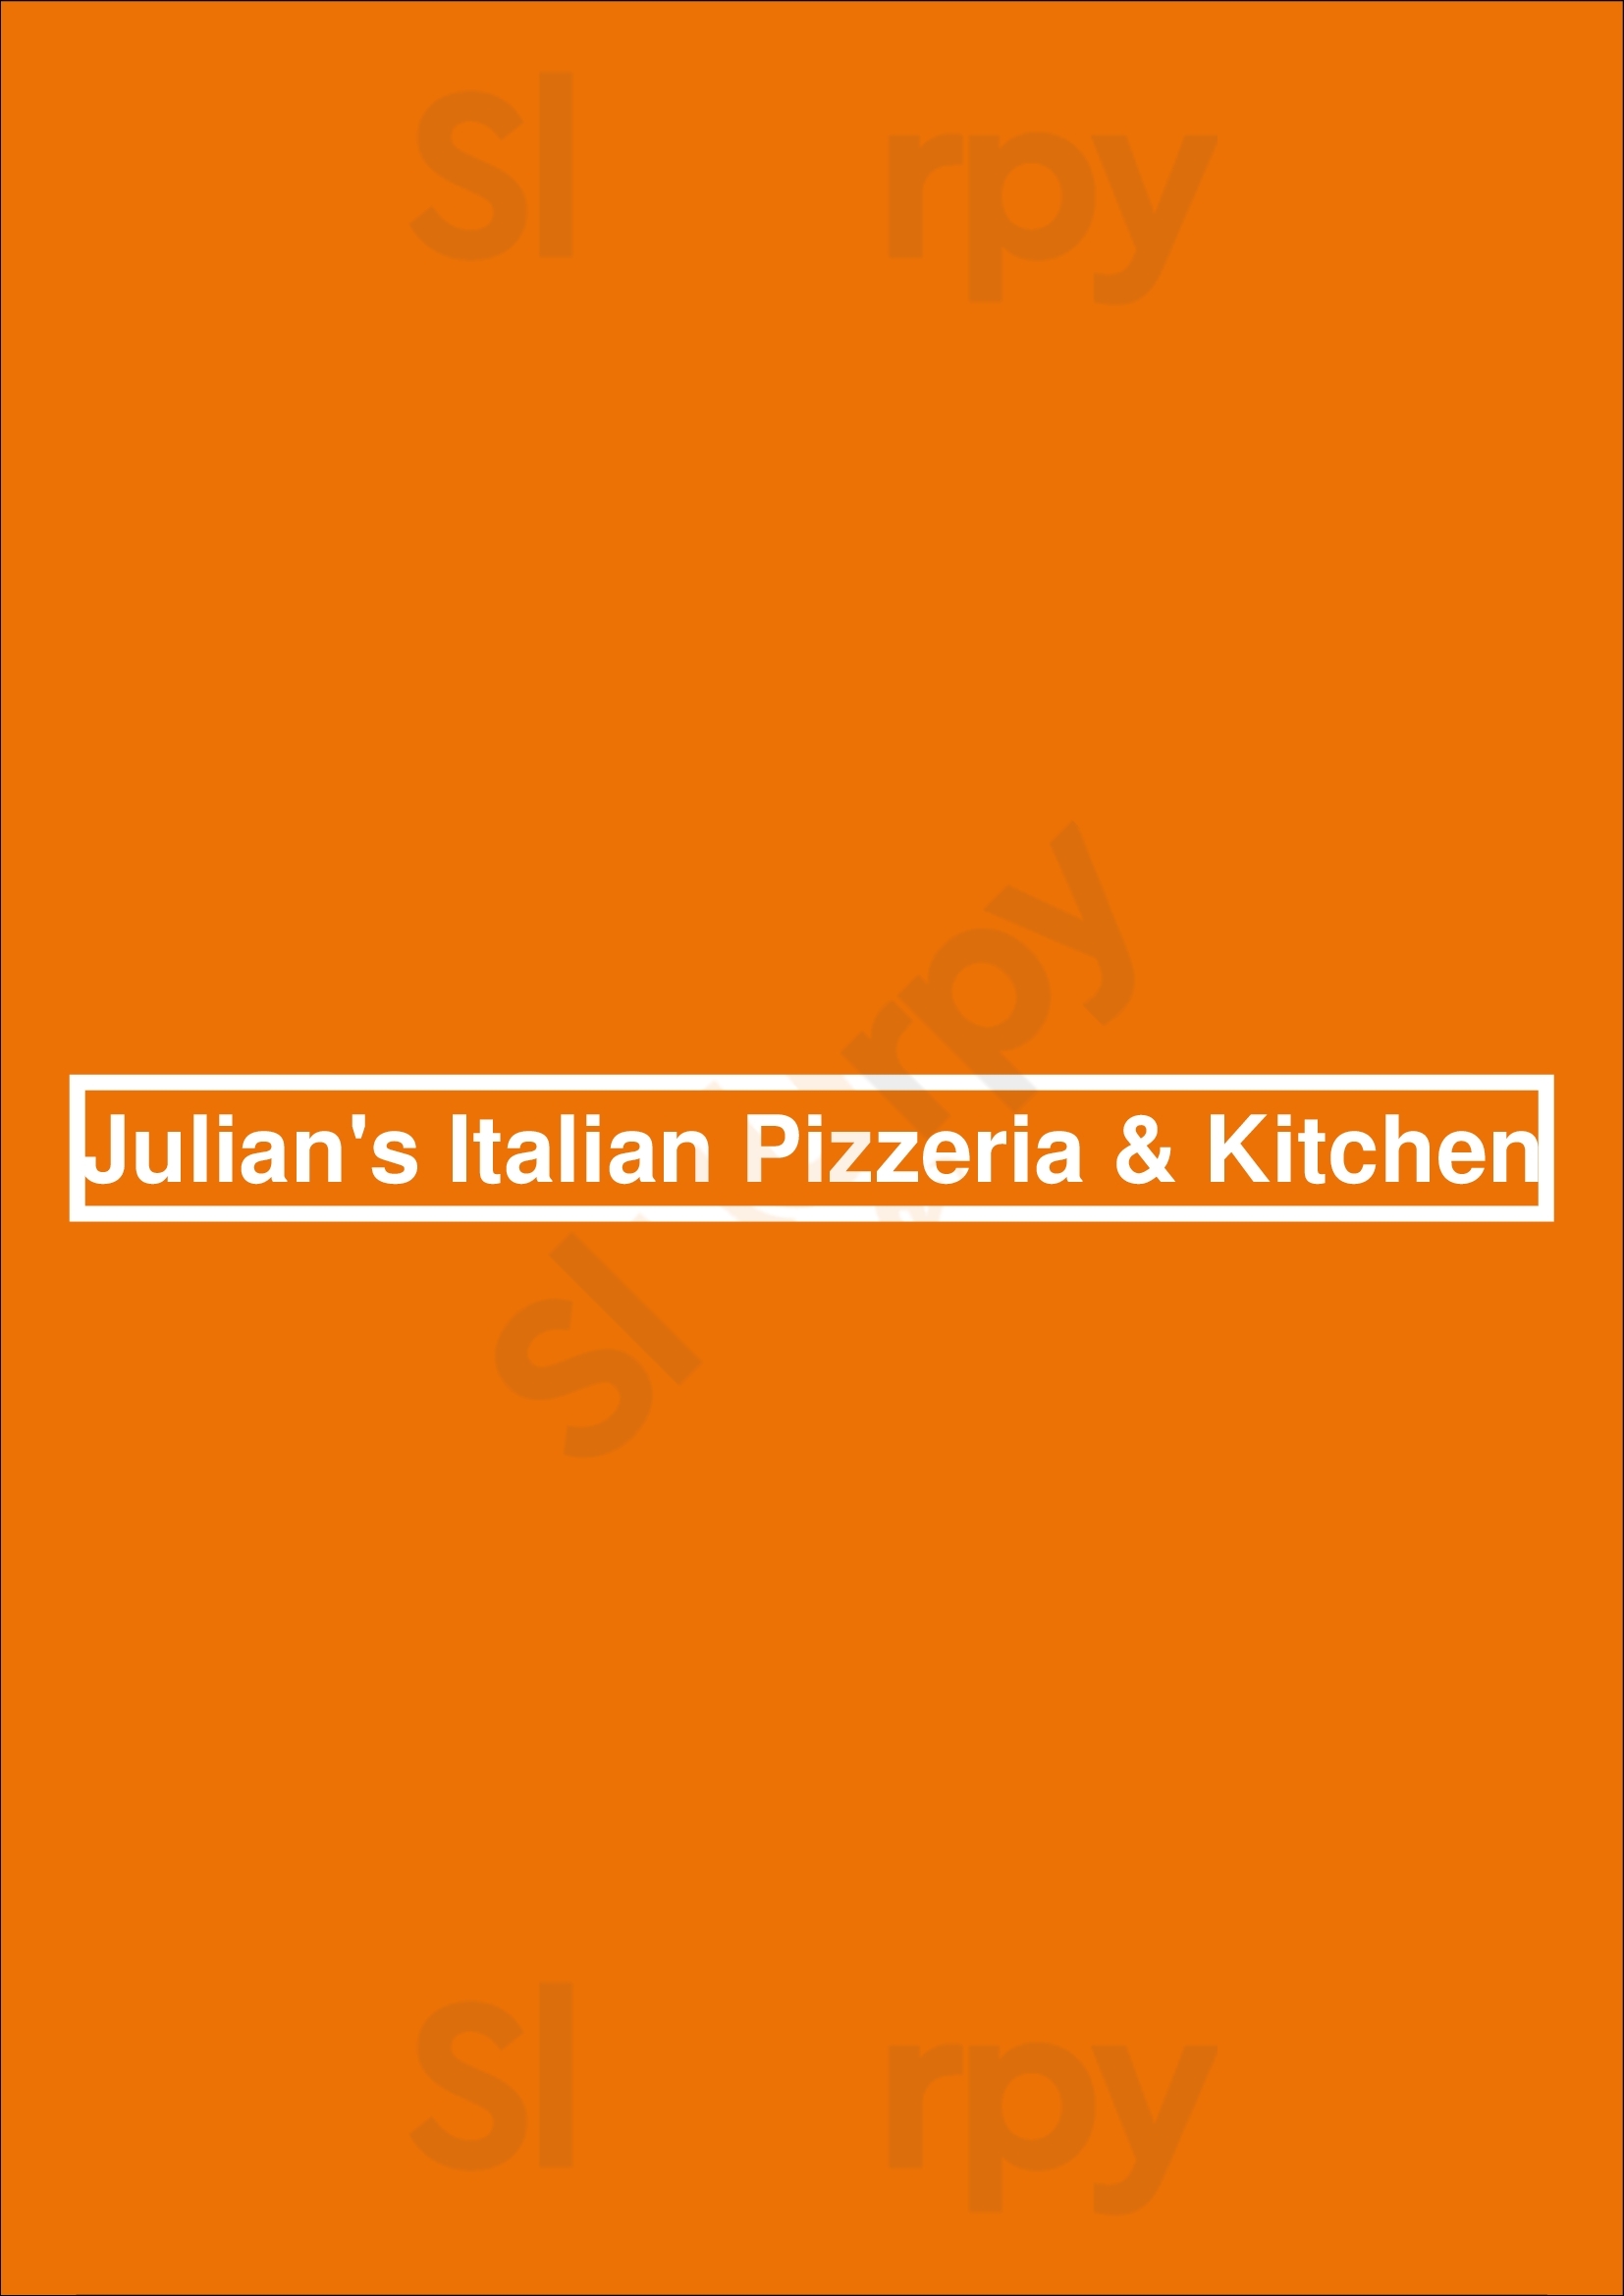 Julian's Italian Pizzeria & Kitchen San Antonio Menu - 1